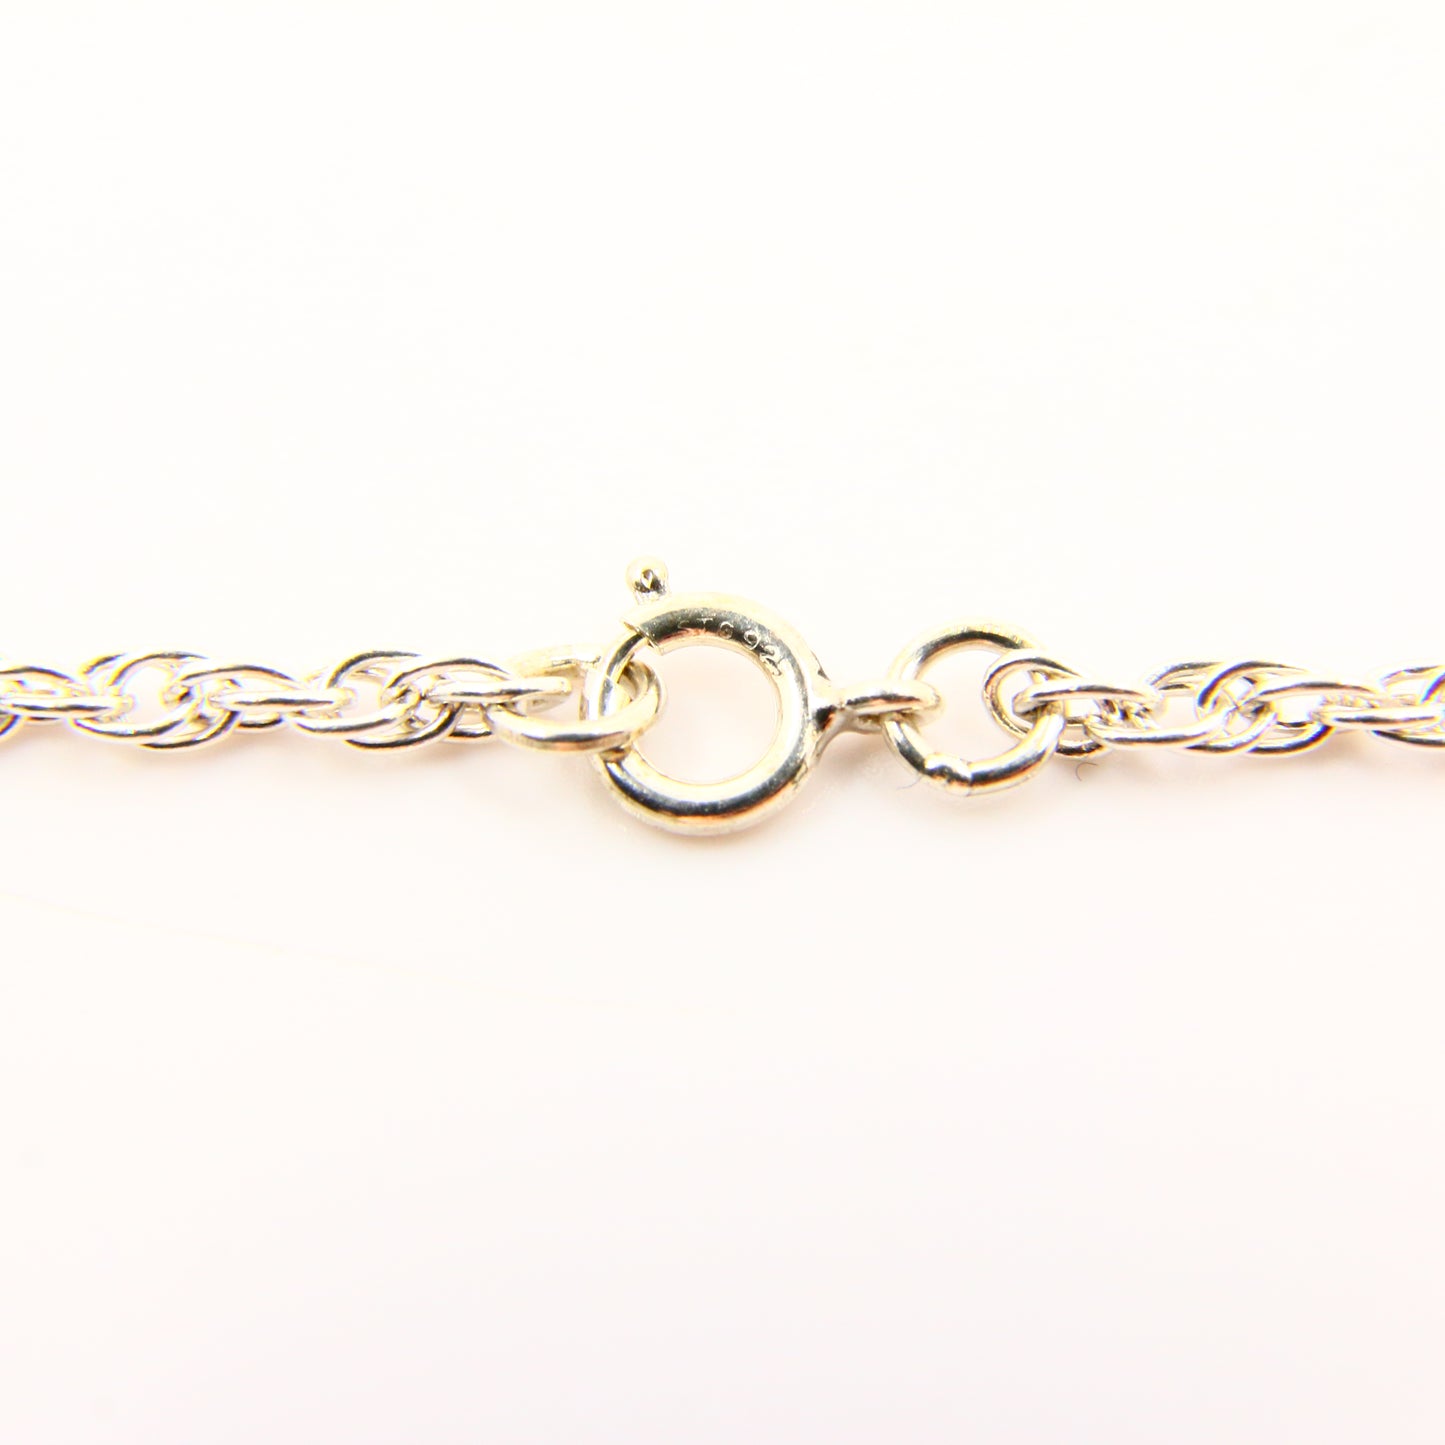 Vintage Britannia Silver Ingot Pendant Necklace 958 Silver Chain Necklace